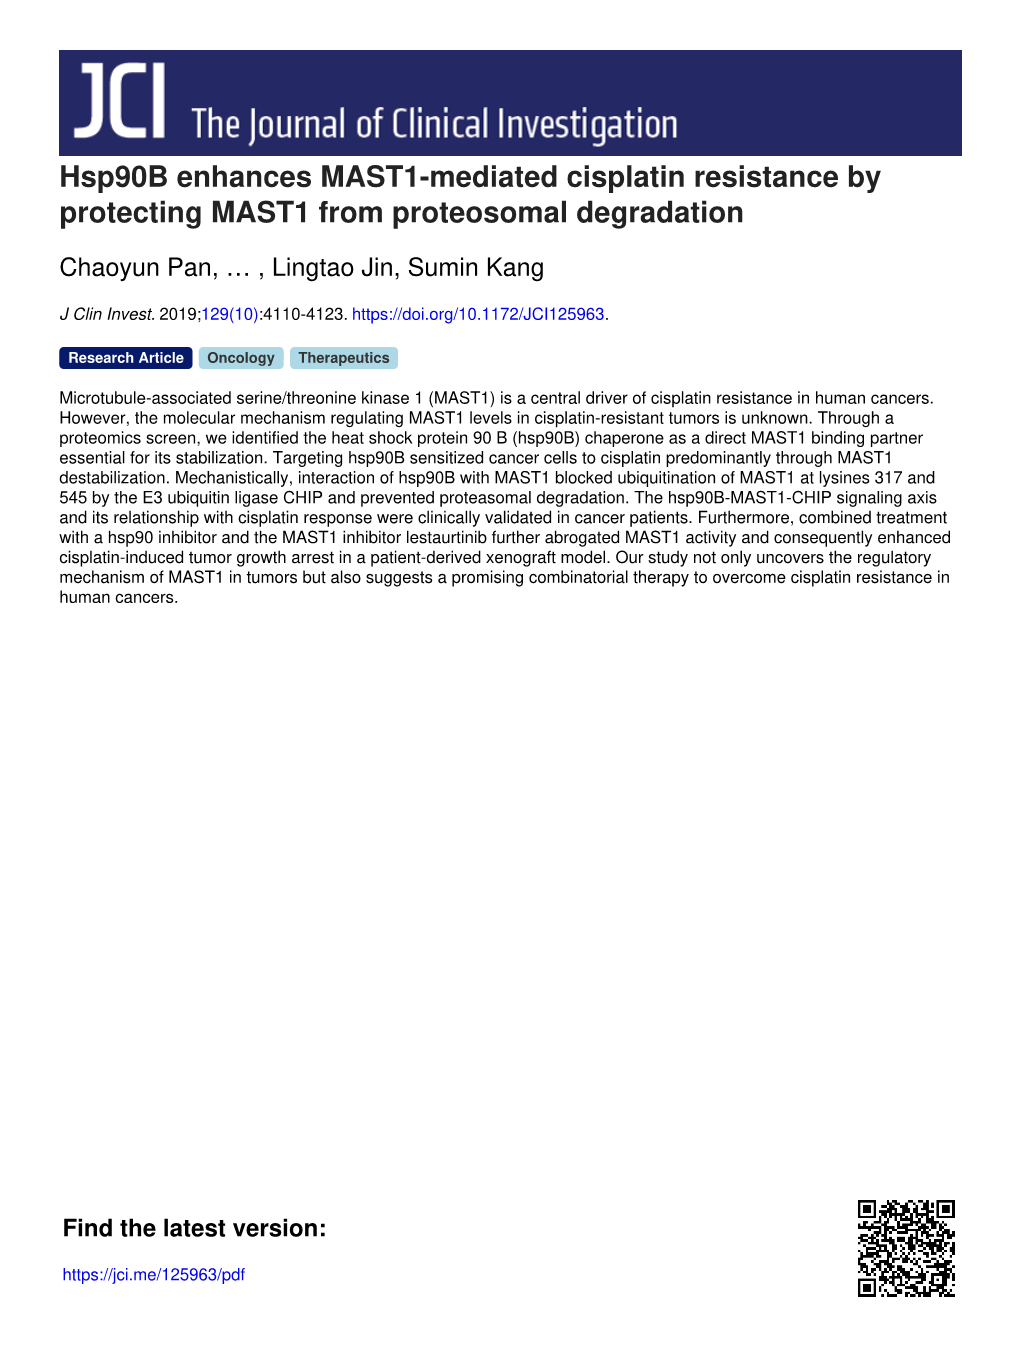 Hsp90b Enhances MAST1-Mediated Cisplatin Resistance by Protecting MAST1 from Proteosomal Degradation